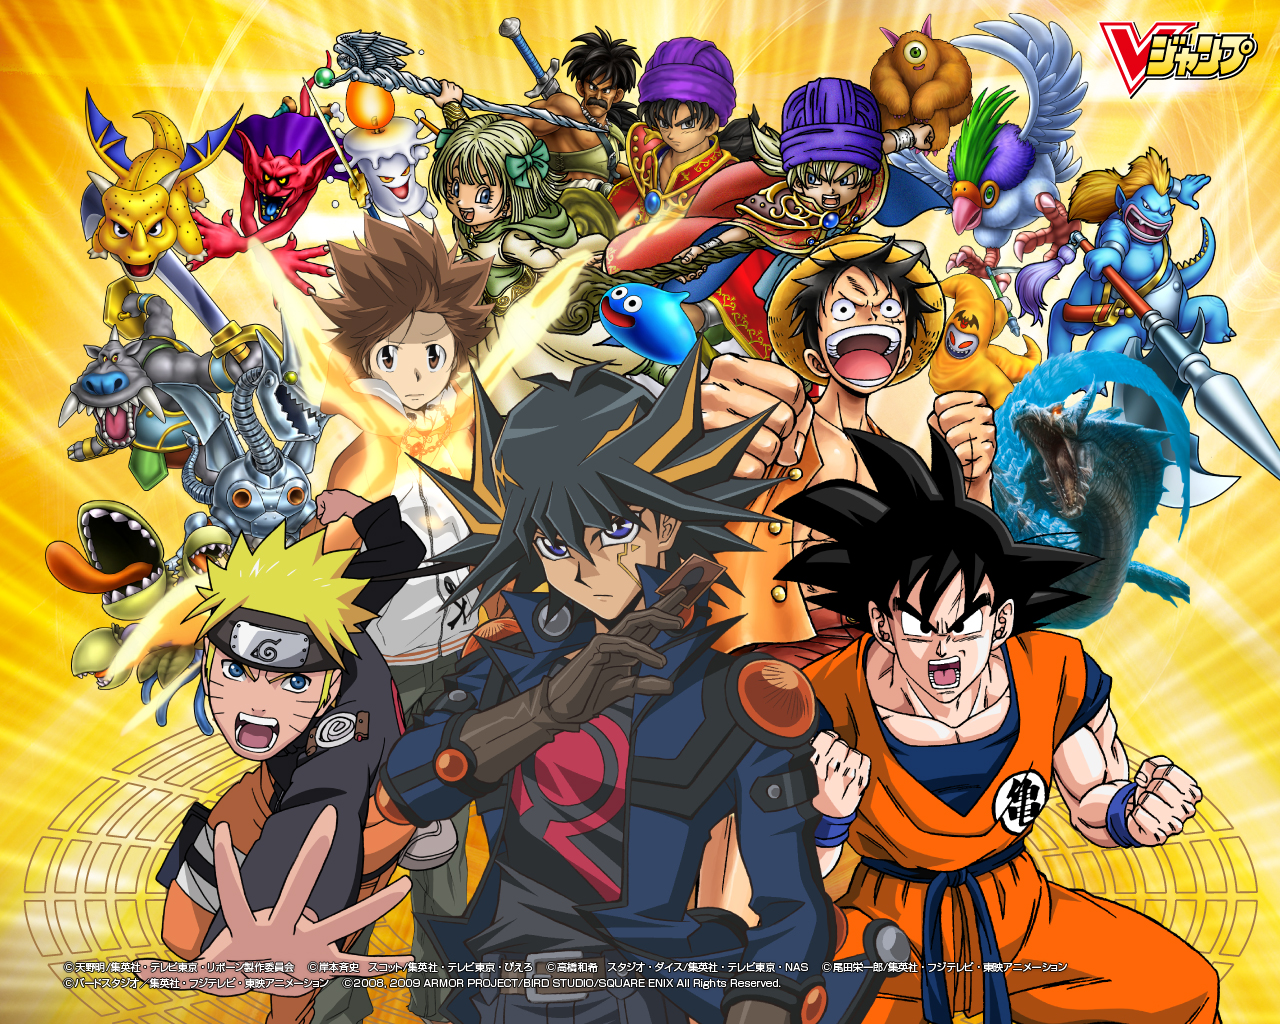 Anime - Anime Wallpaper (31223028) - Fanpop